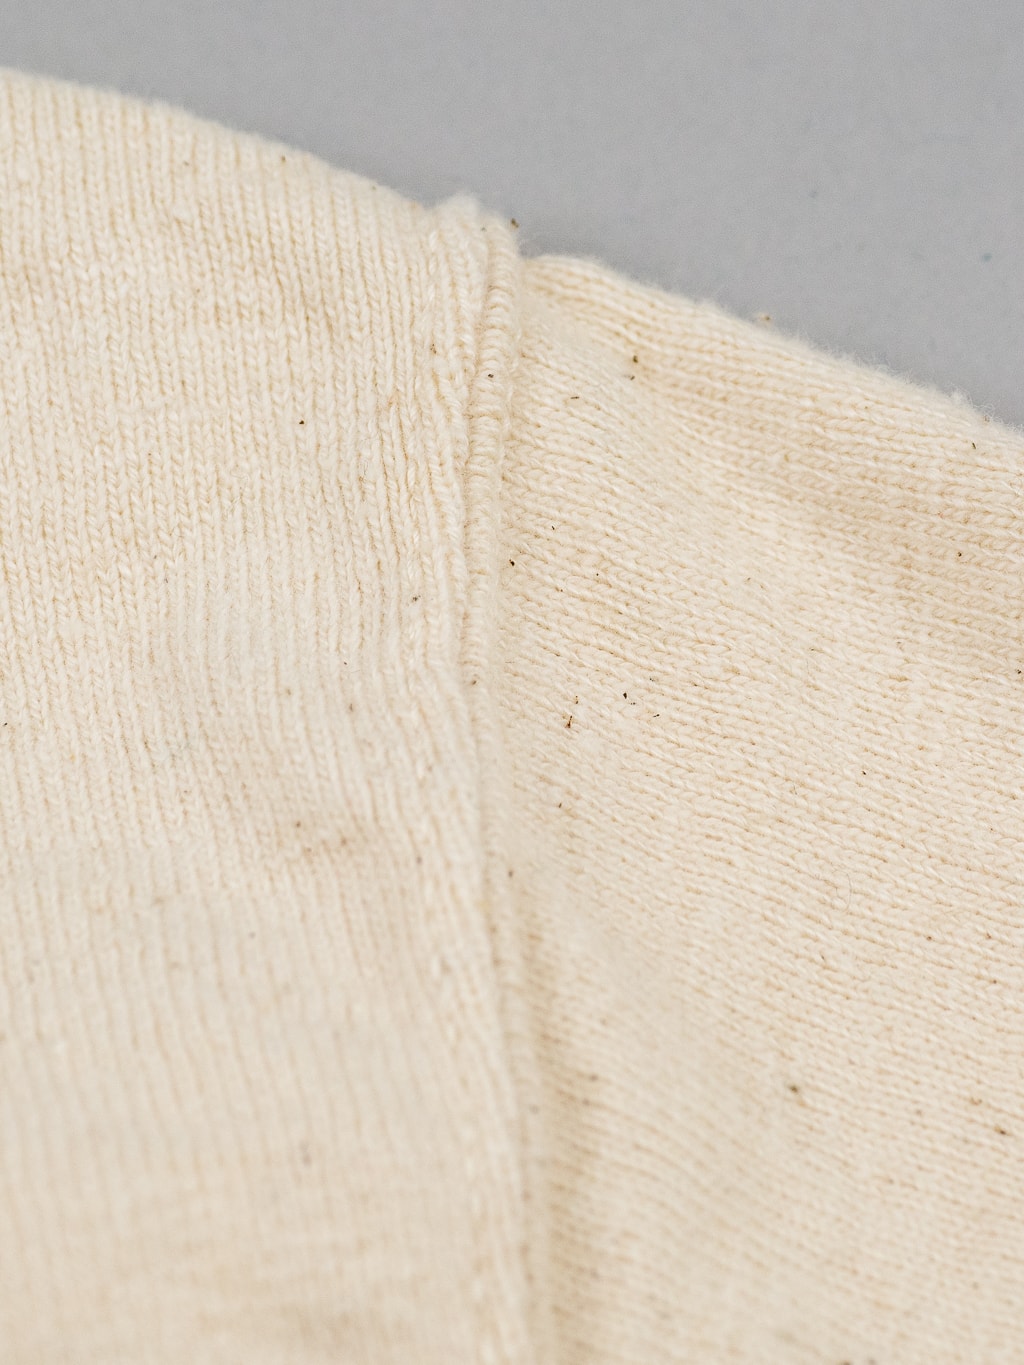 samurai jeans japanese cotton slub tshirt henley natural stitchin